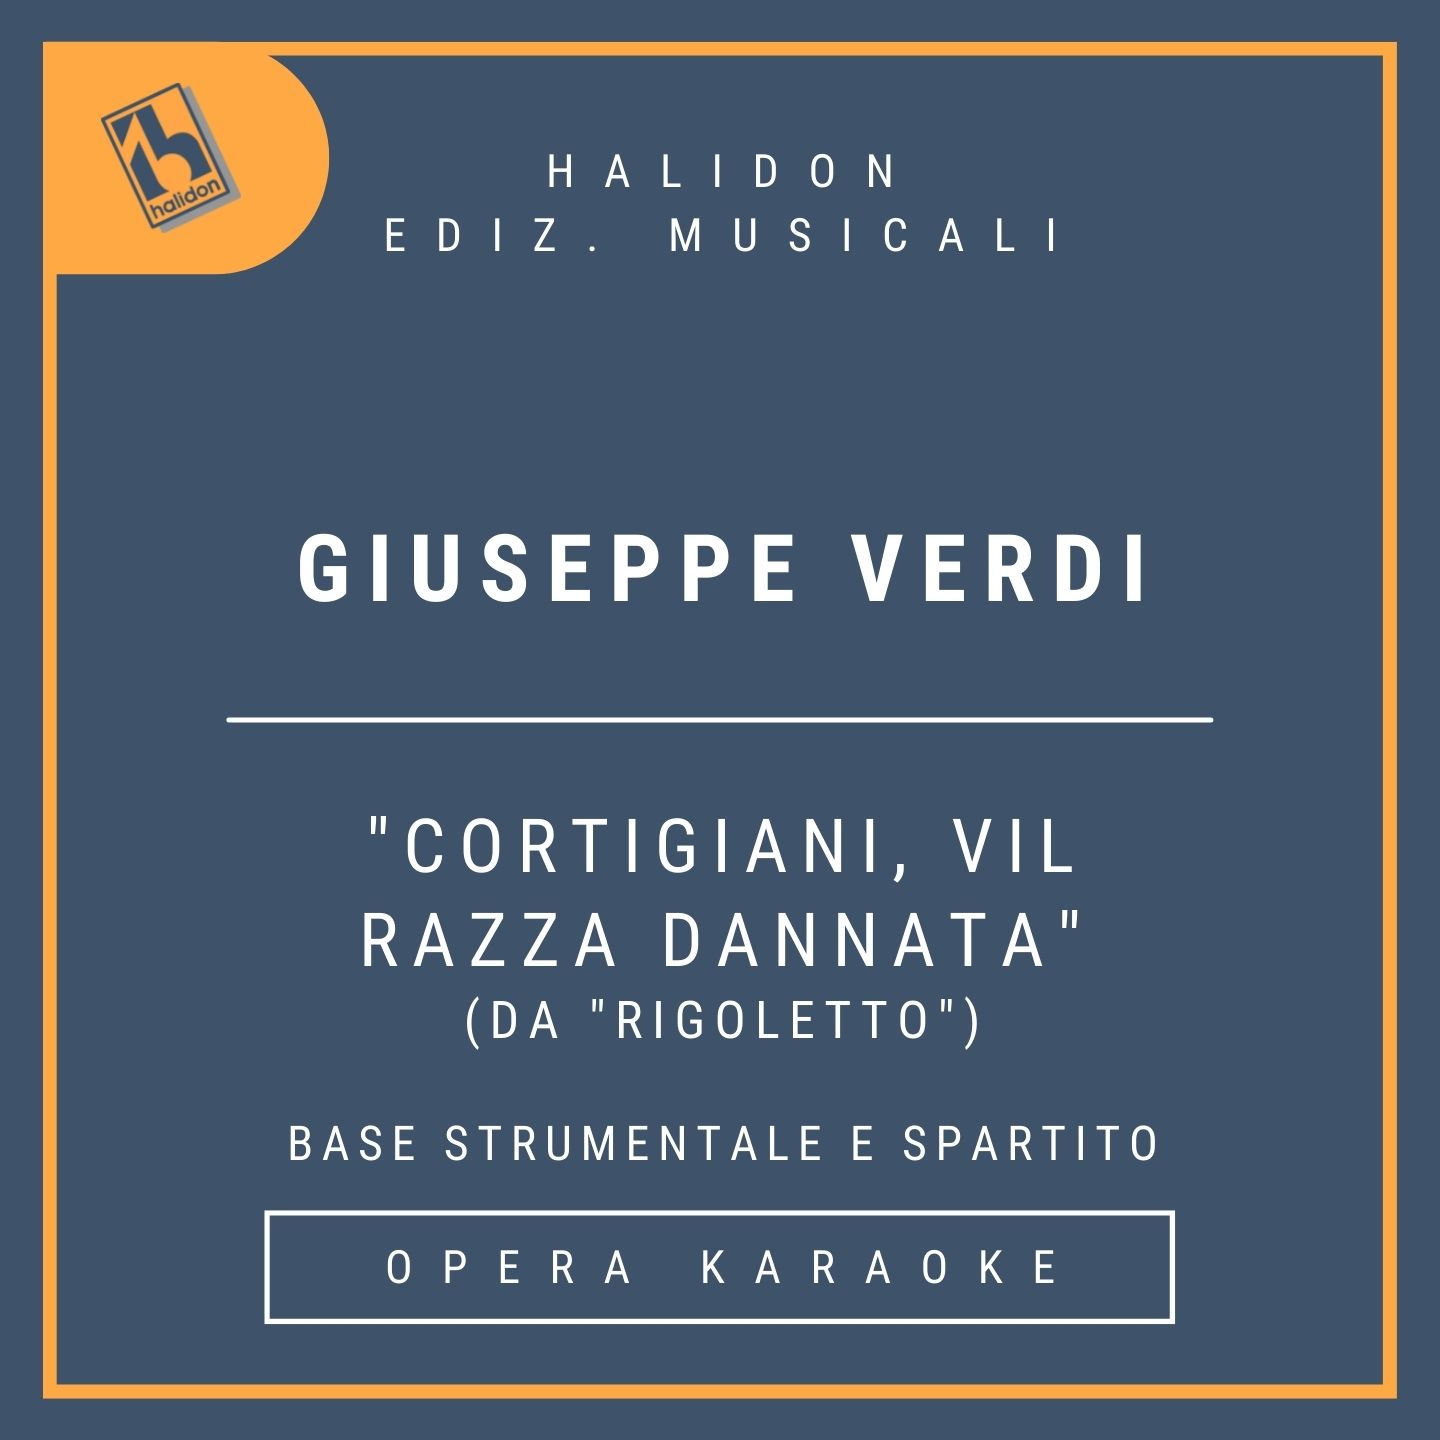 Giuseppe Verdi - Cortigiani, vil razza dannata! (from 'Rigoletto') - Rigoletto's Aria (baritone) - Instrumental track + sheet